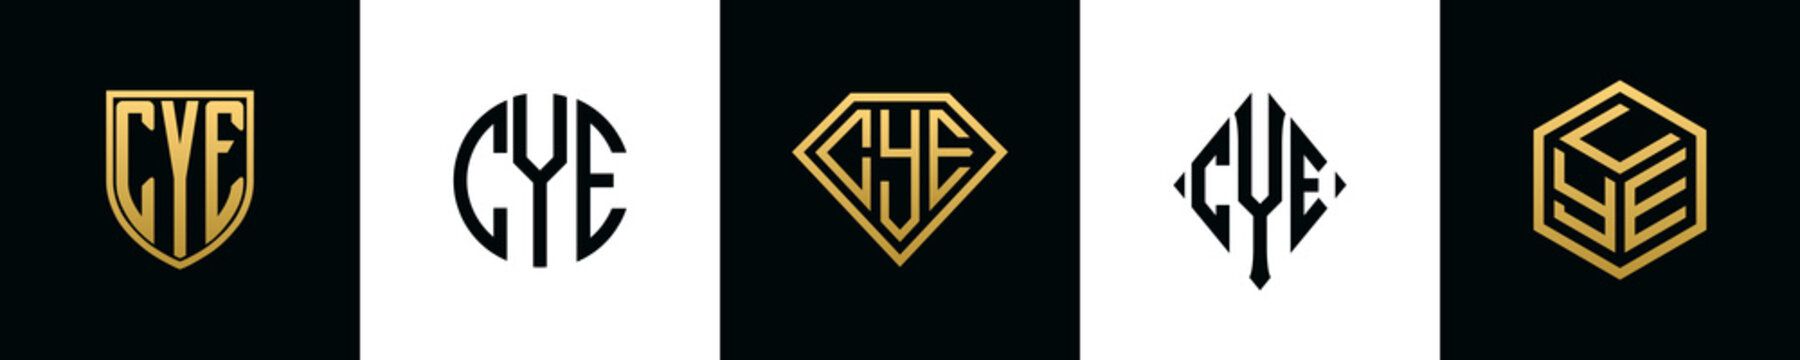 Initial letters CYE logo designs Bundle